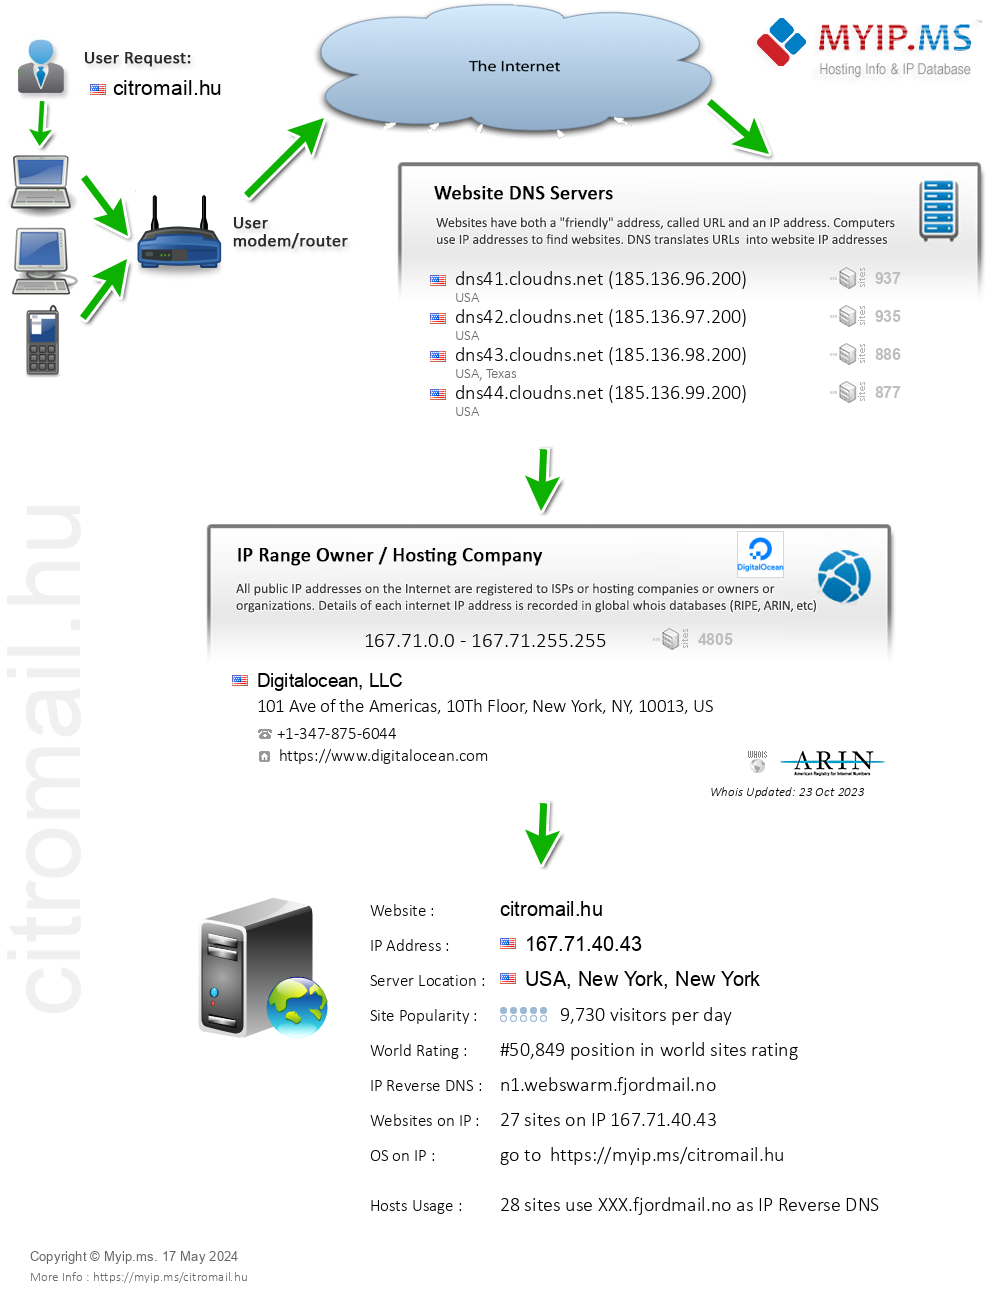 Citromail.hu - Website Hosting Visual IP Diagram